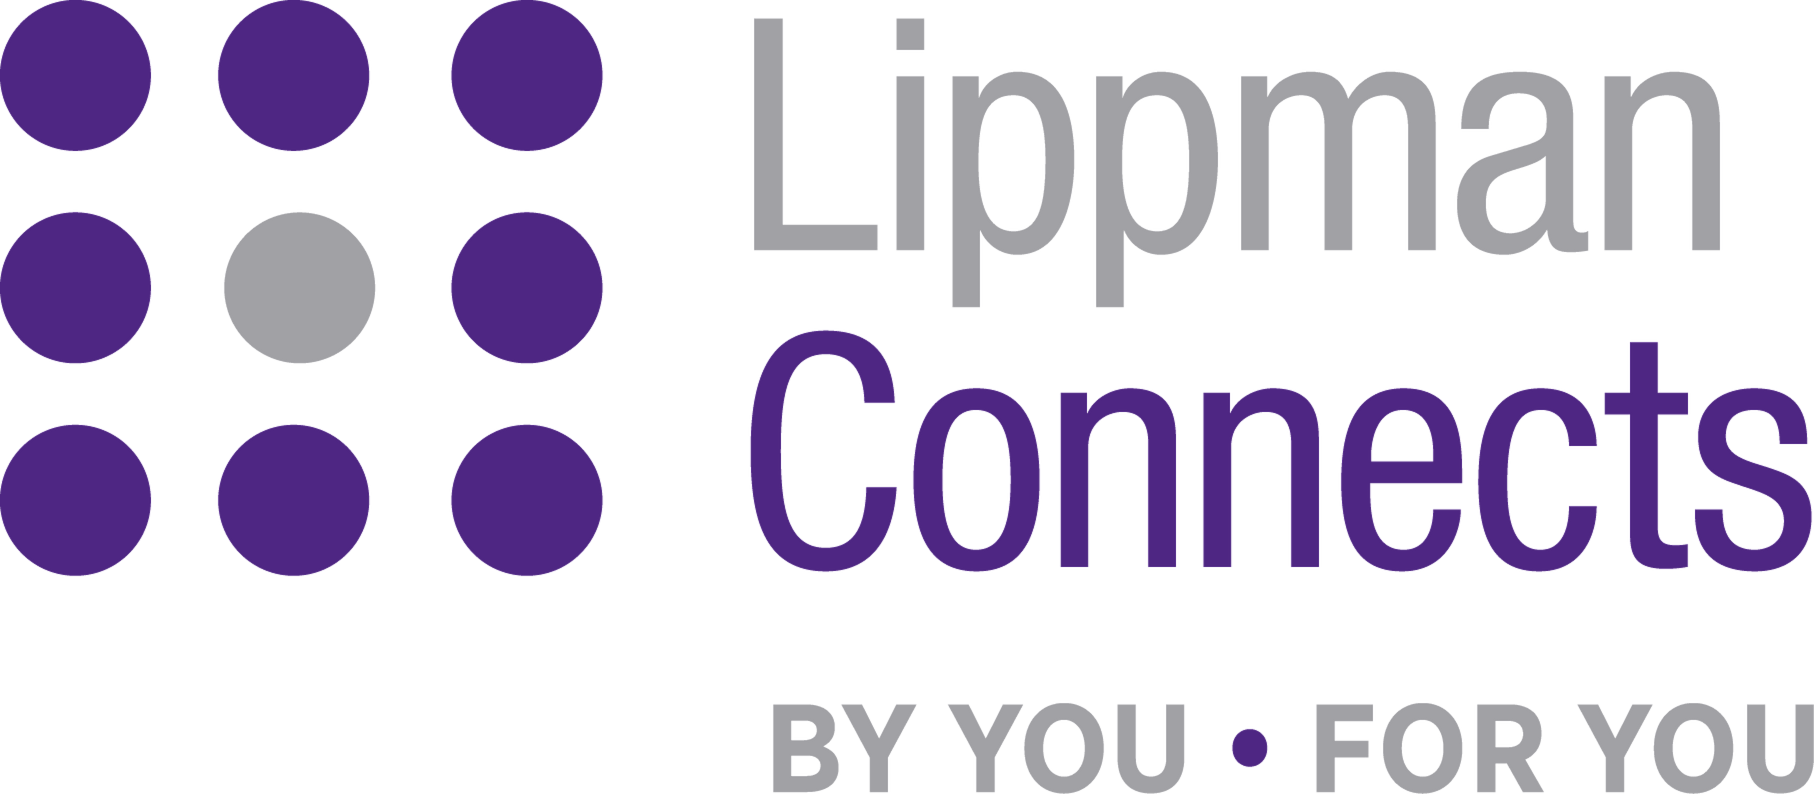 Lippman Connects